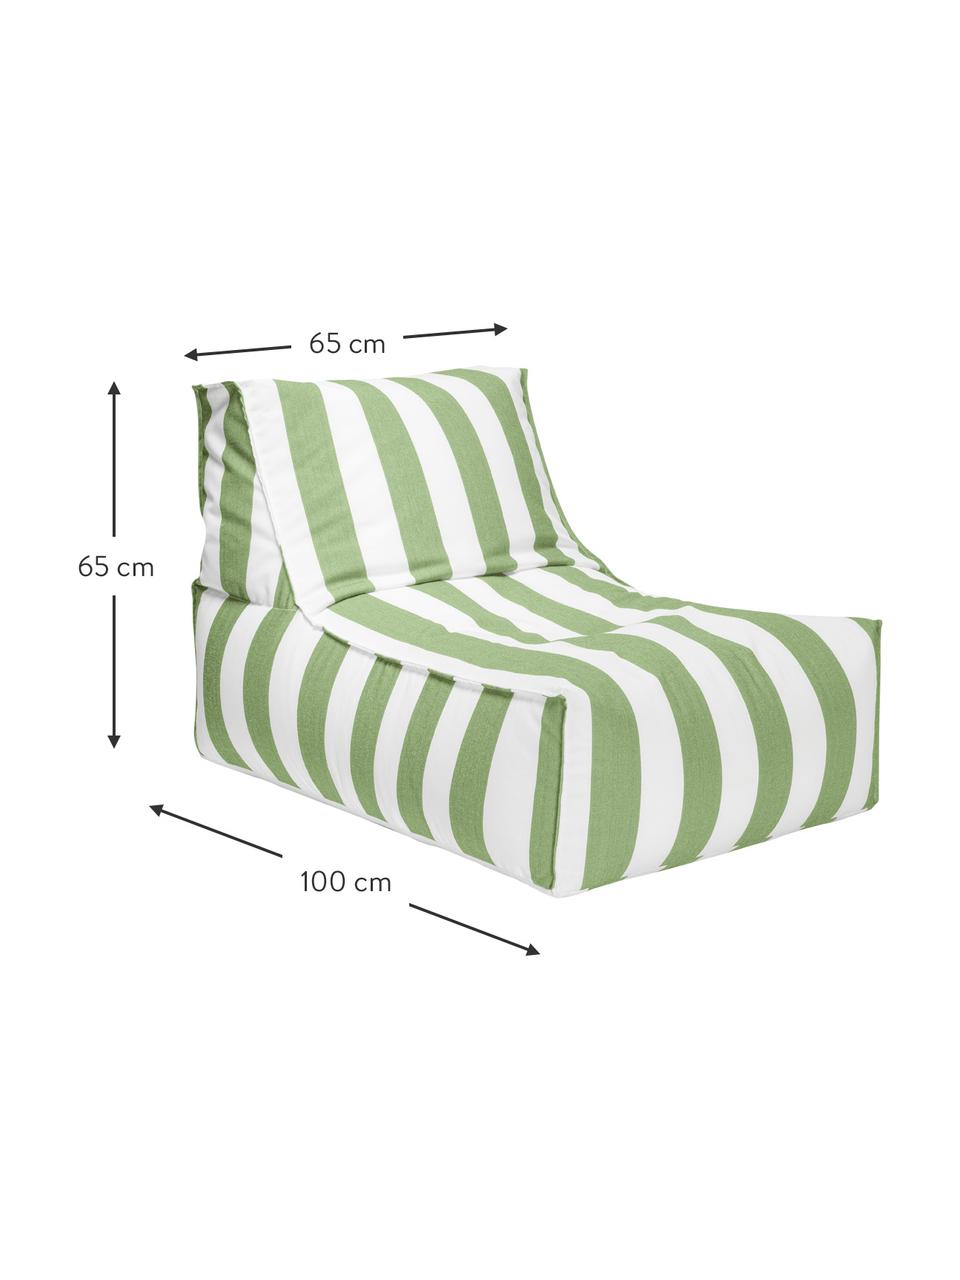 Outdoorzitzak Korfu in groen/wit, Bekleding: 100% polypropyleen, teflo, Groen, wit, B 65 x D 100 cm